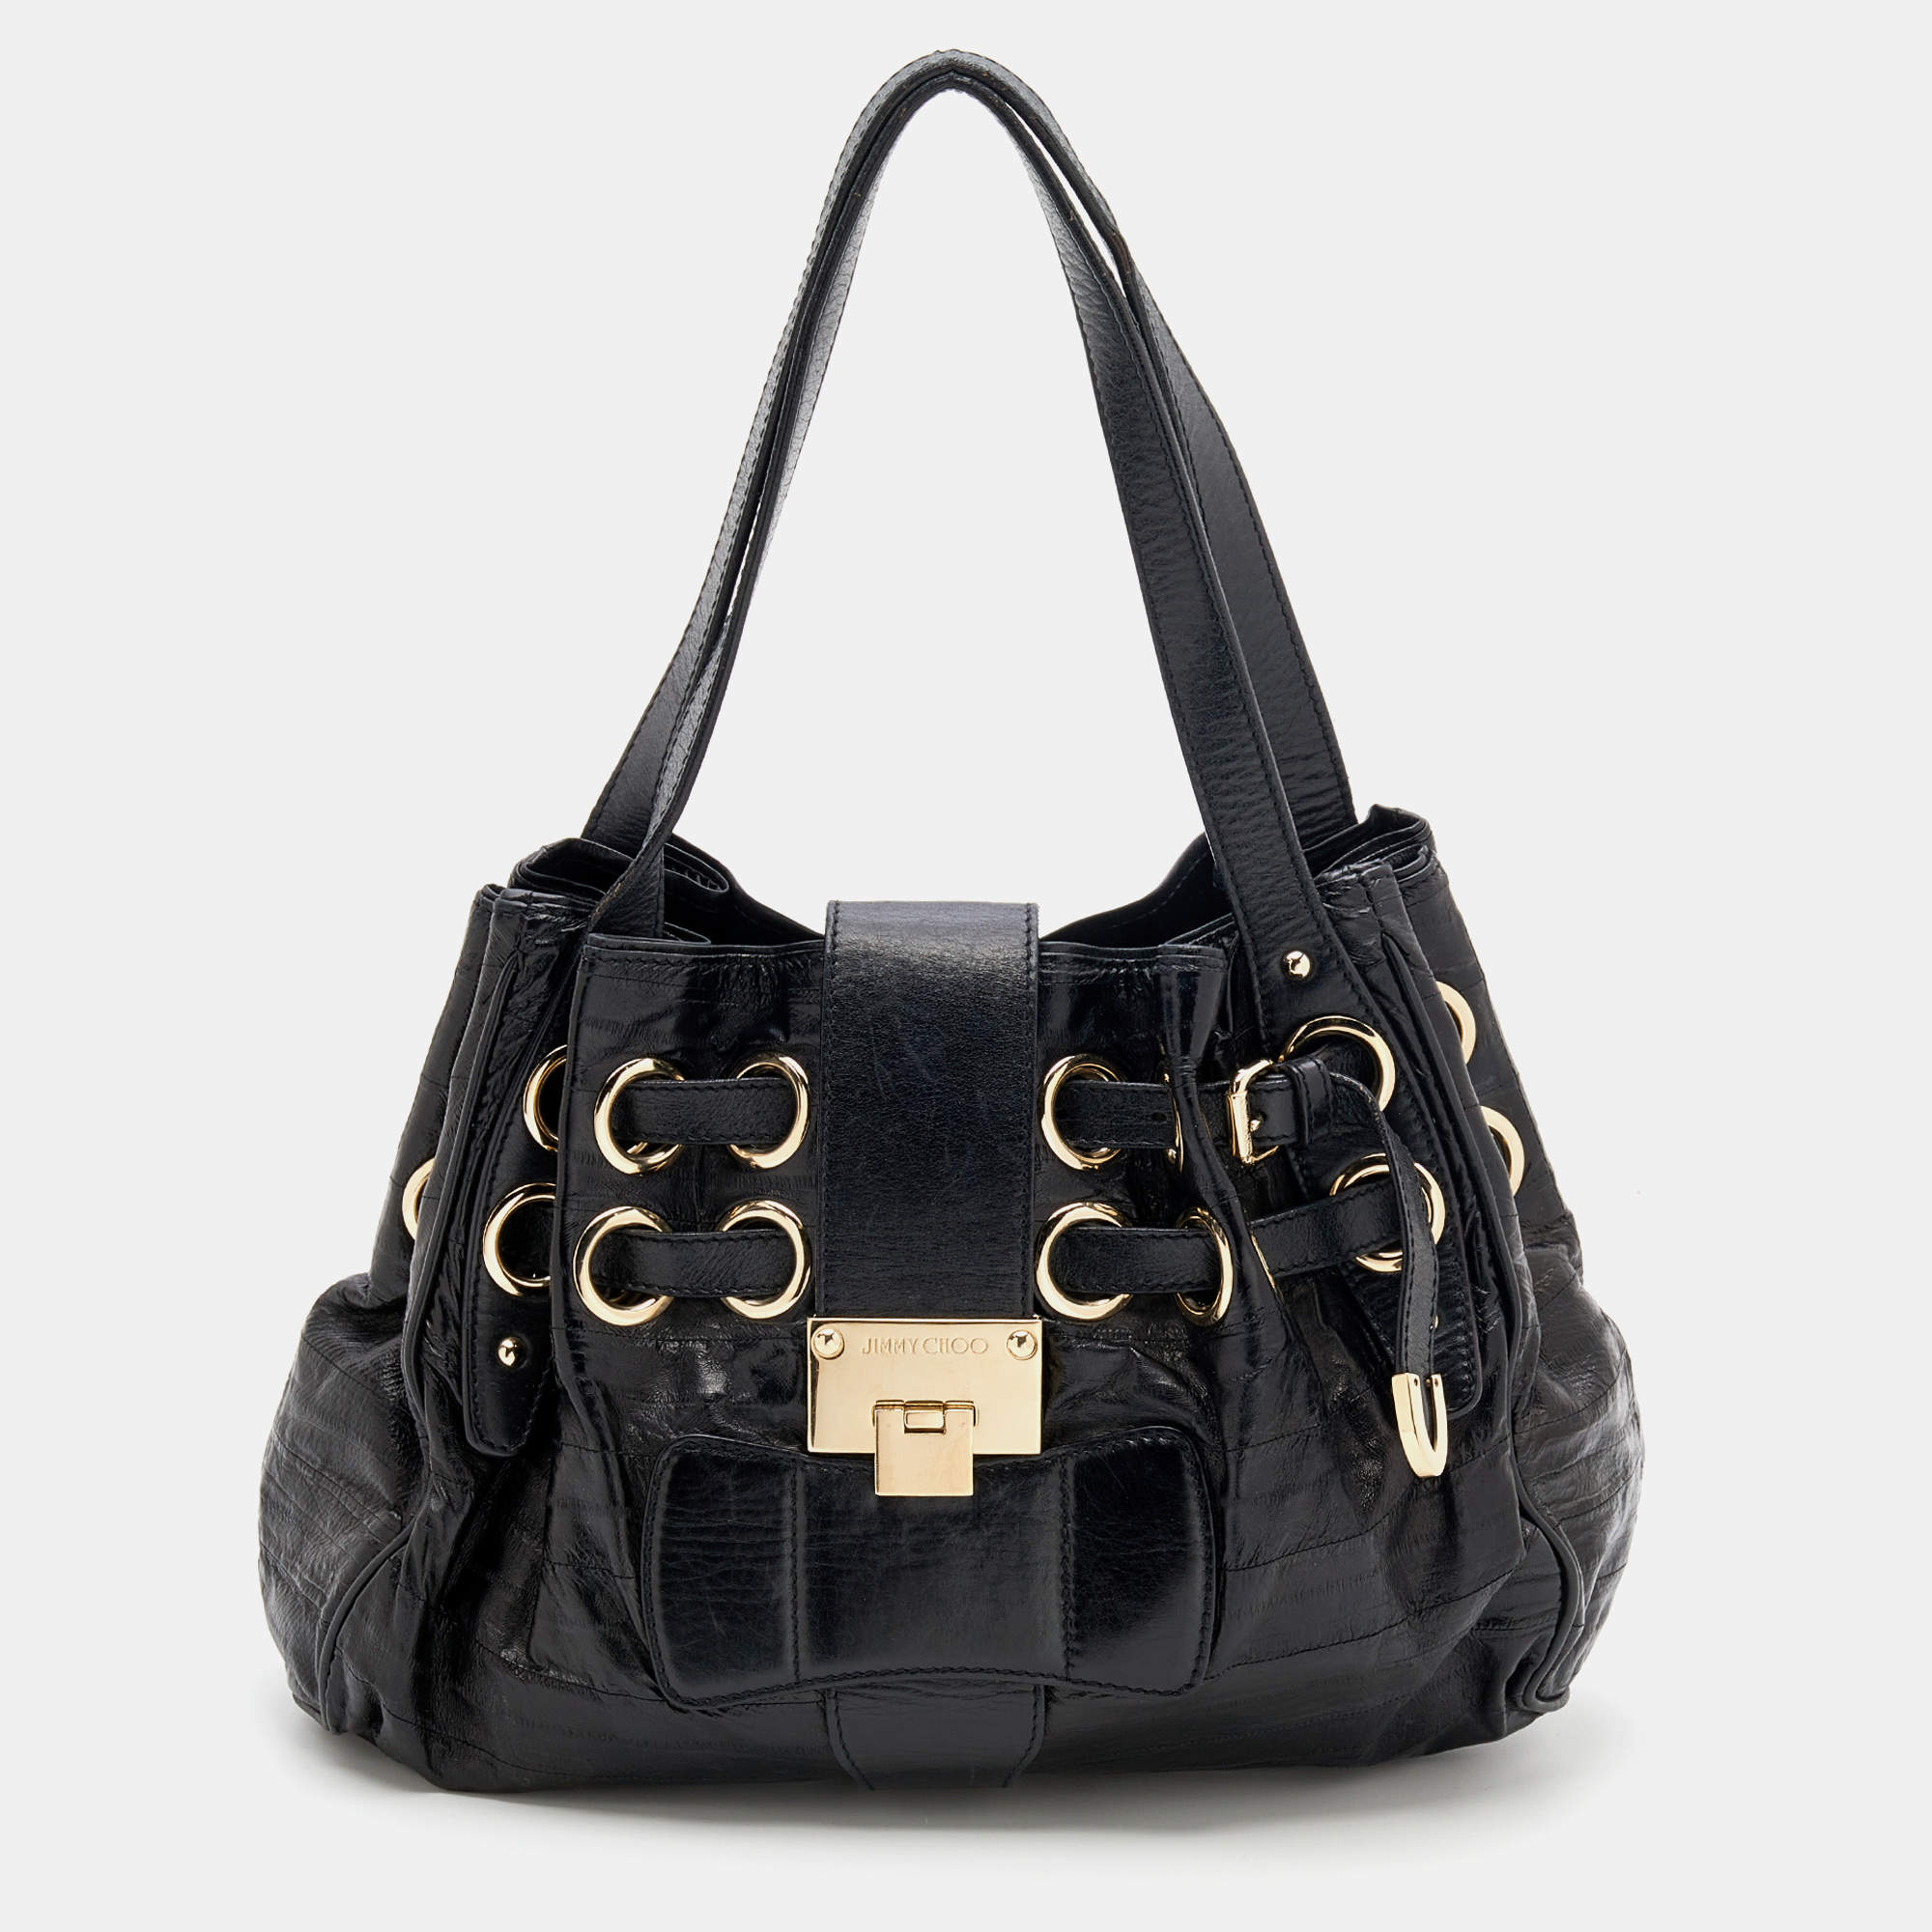 Luxury handbag - Jimmy Choo black leather purse bag with metallic studs